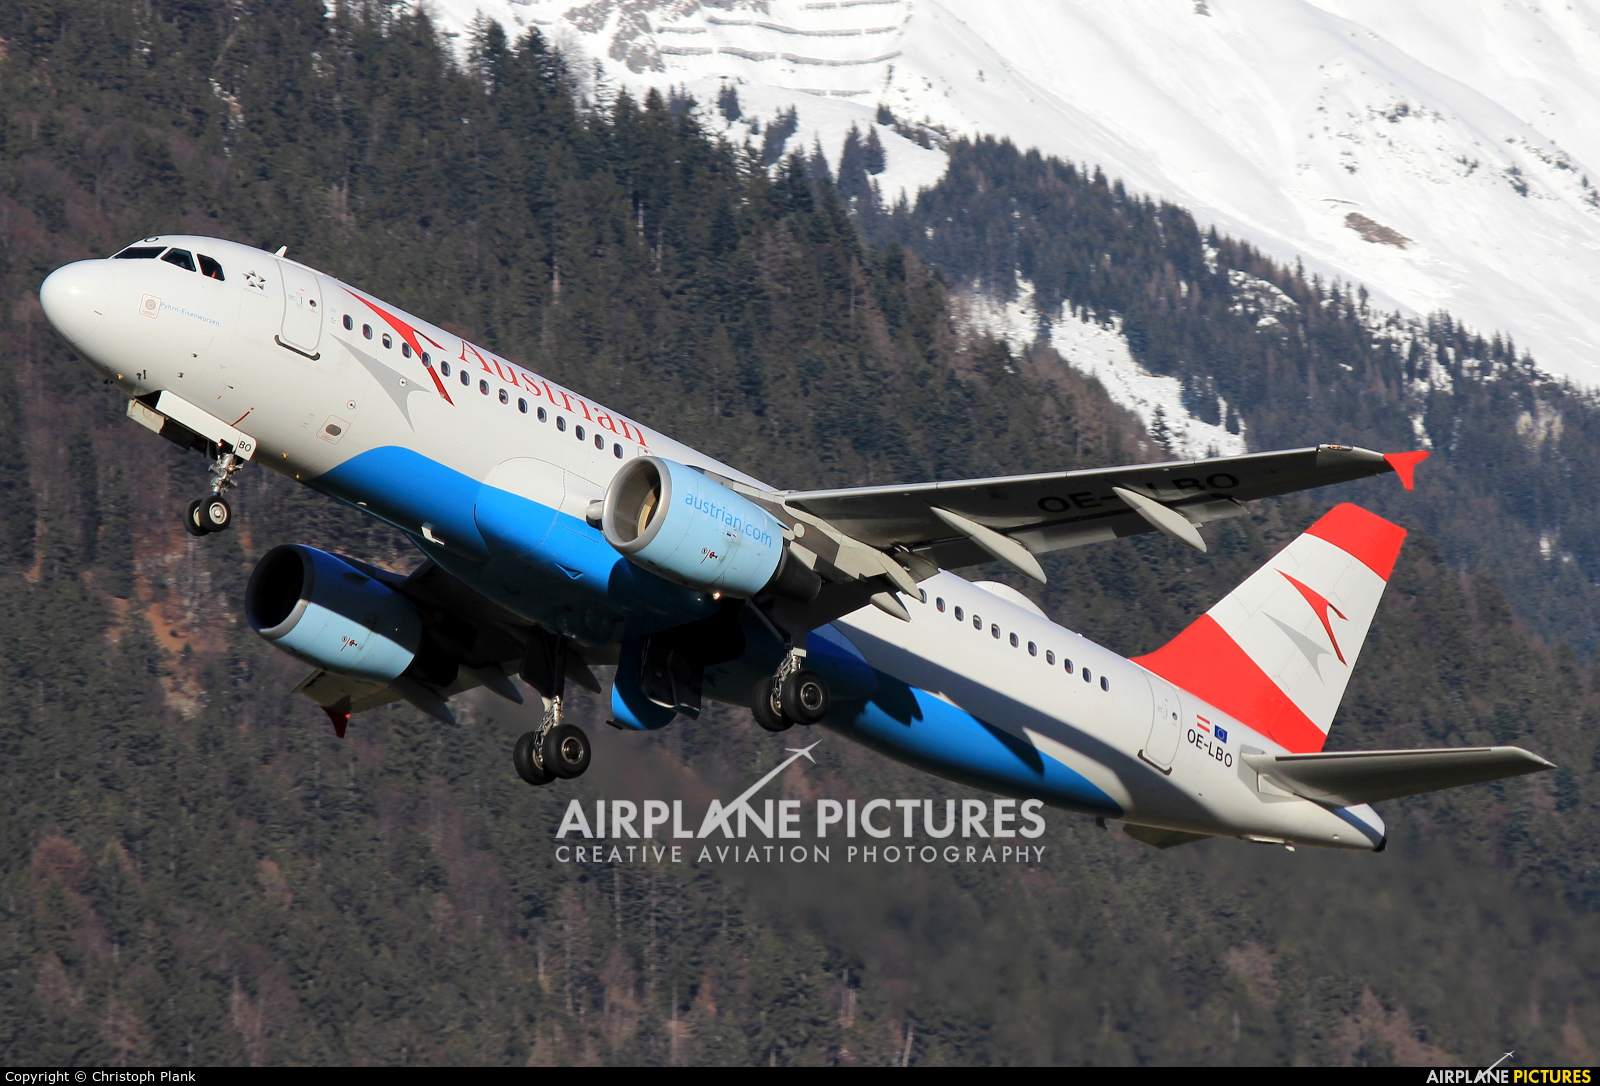 Austrian Airlines/Arrows/Tyrolean OE-LBO aircraft at Innsbruck